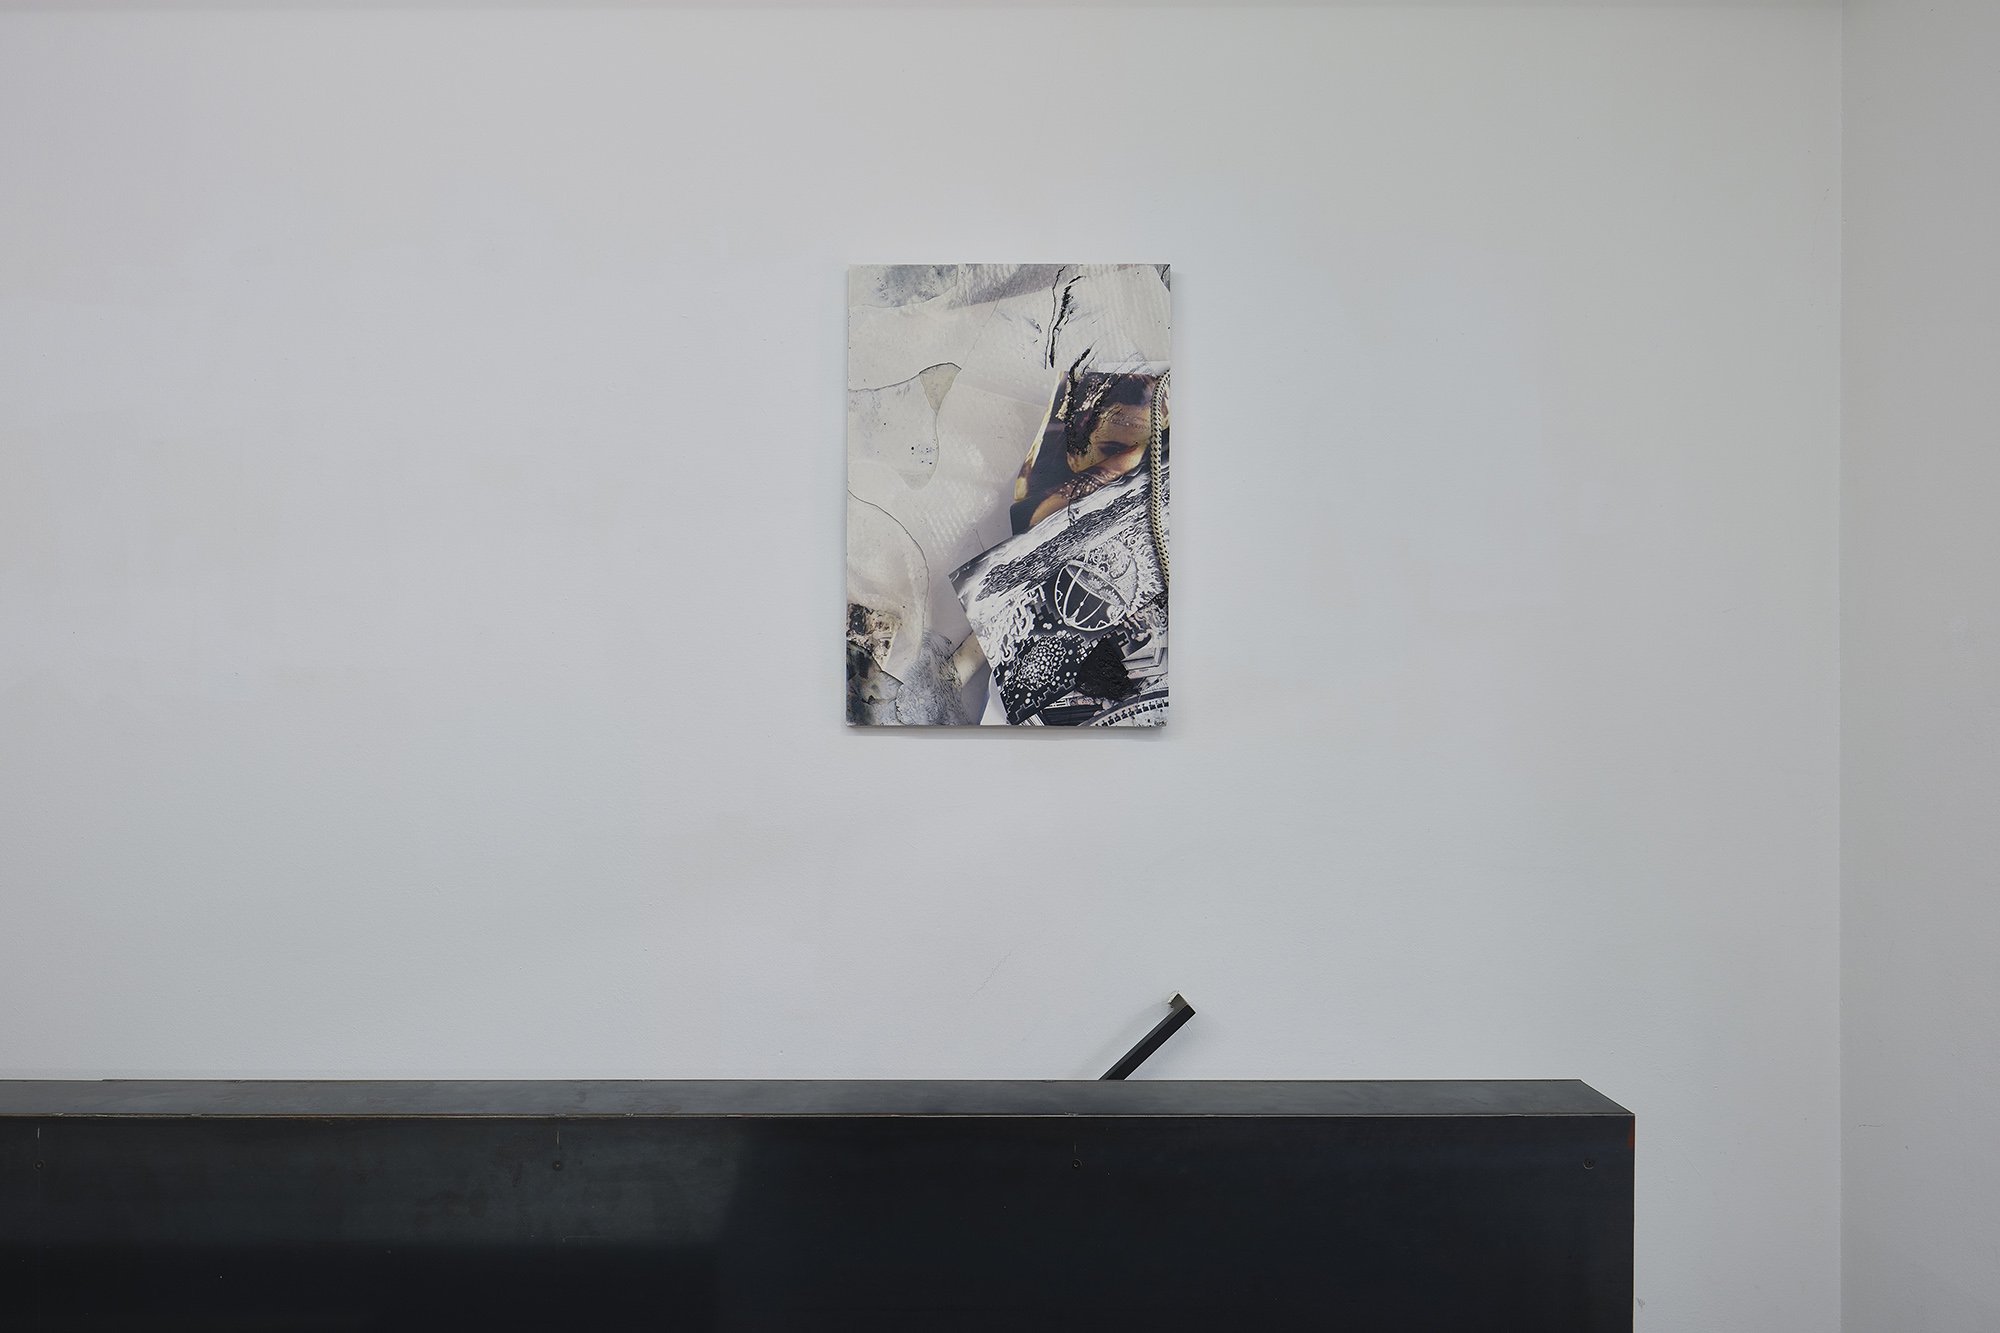 Galerie-Johann-Widauer-Exhibition-2021-Peles-Empire-the-other-amber-18.jpg